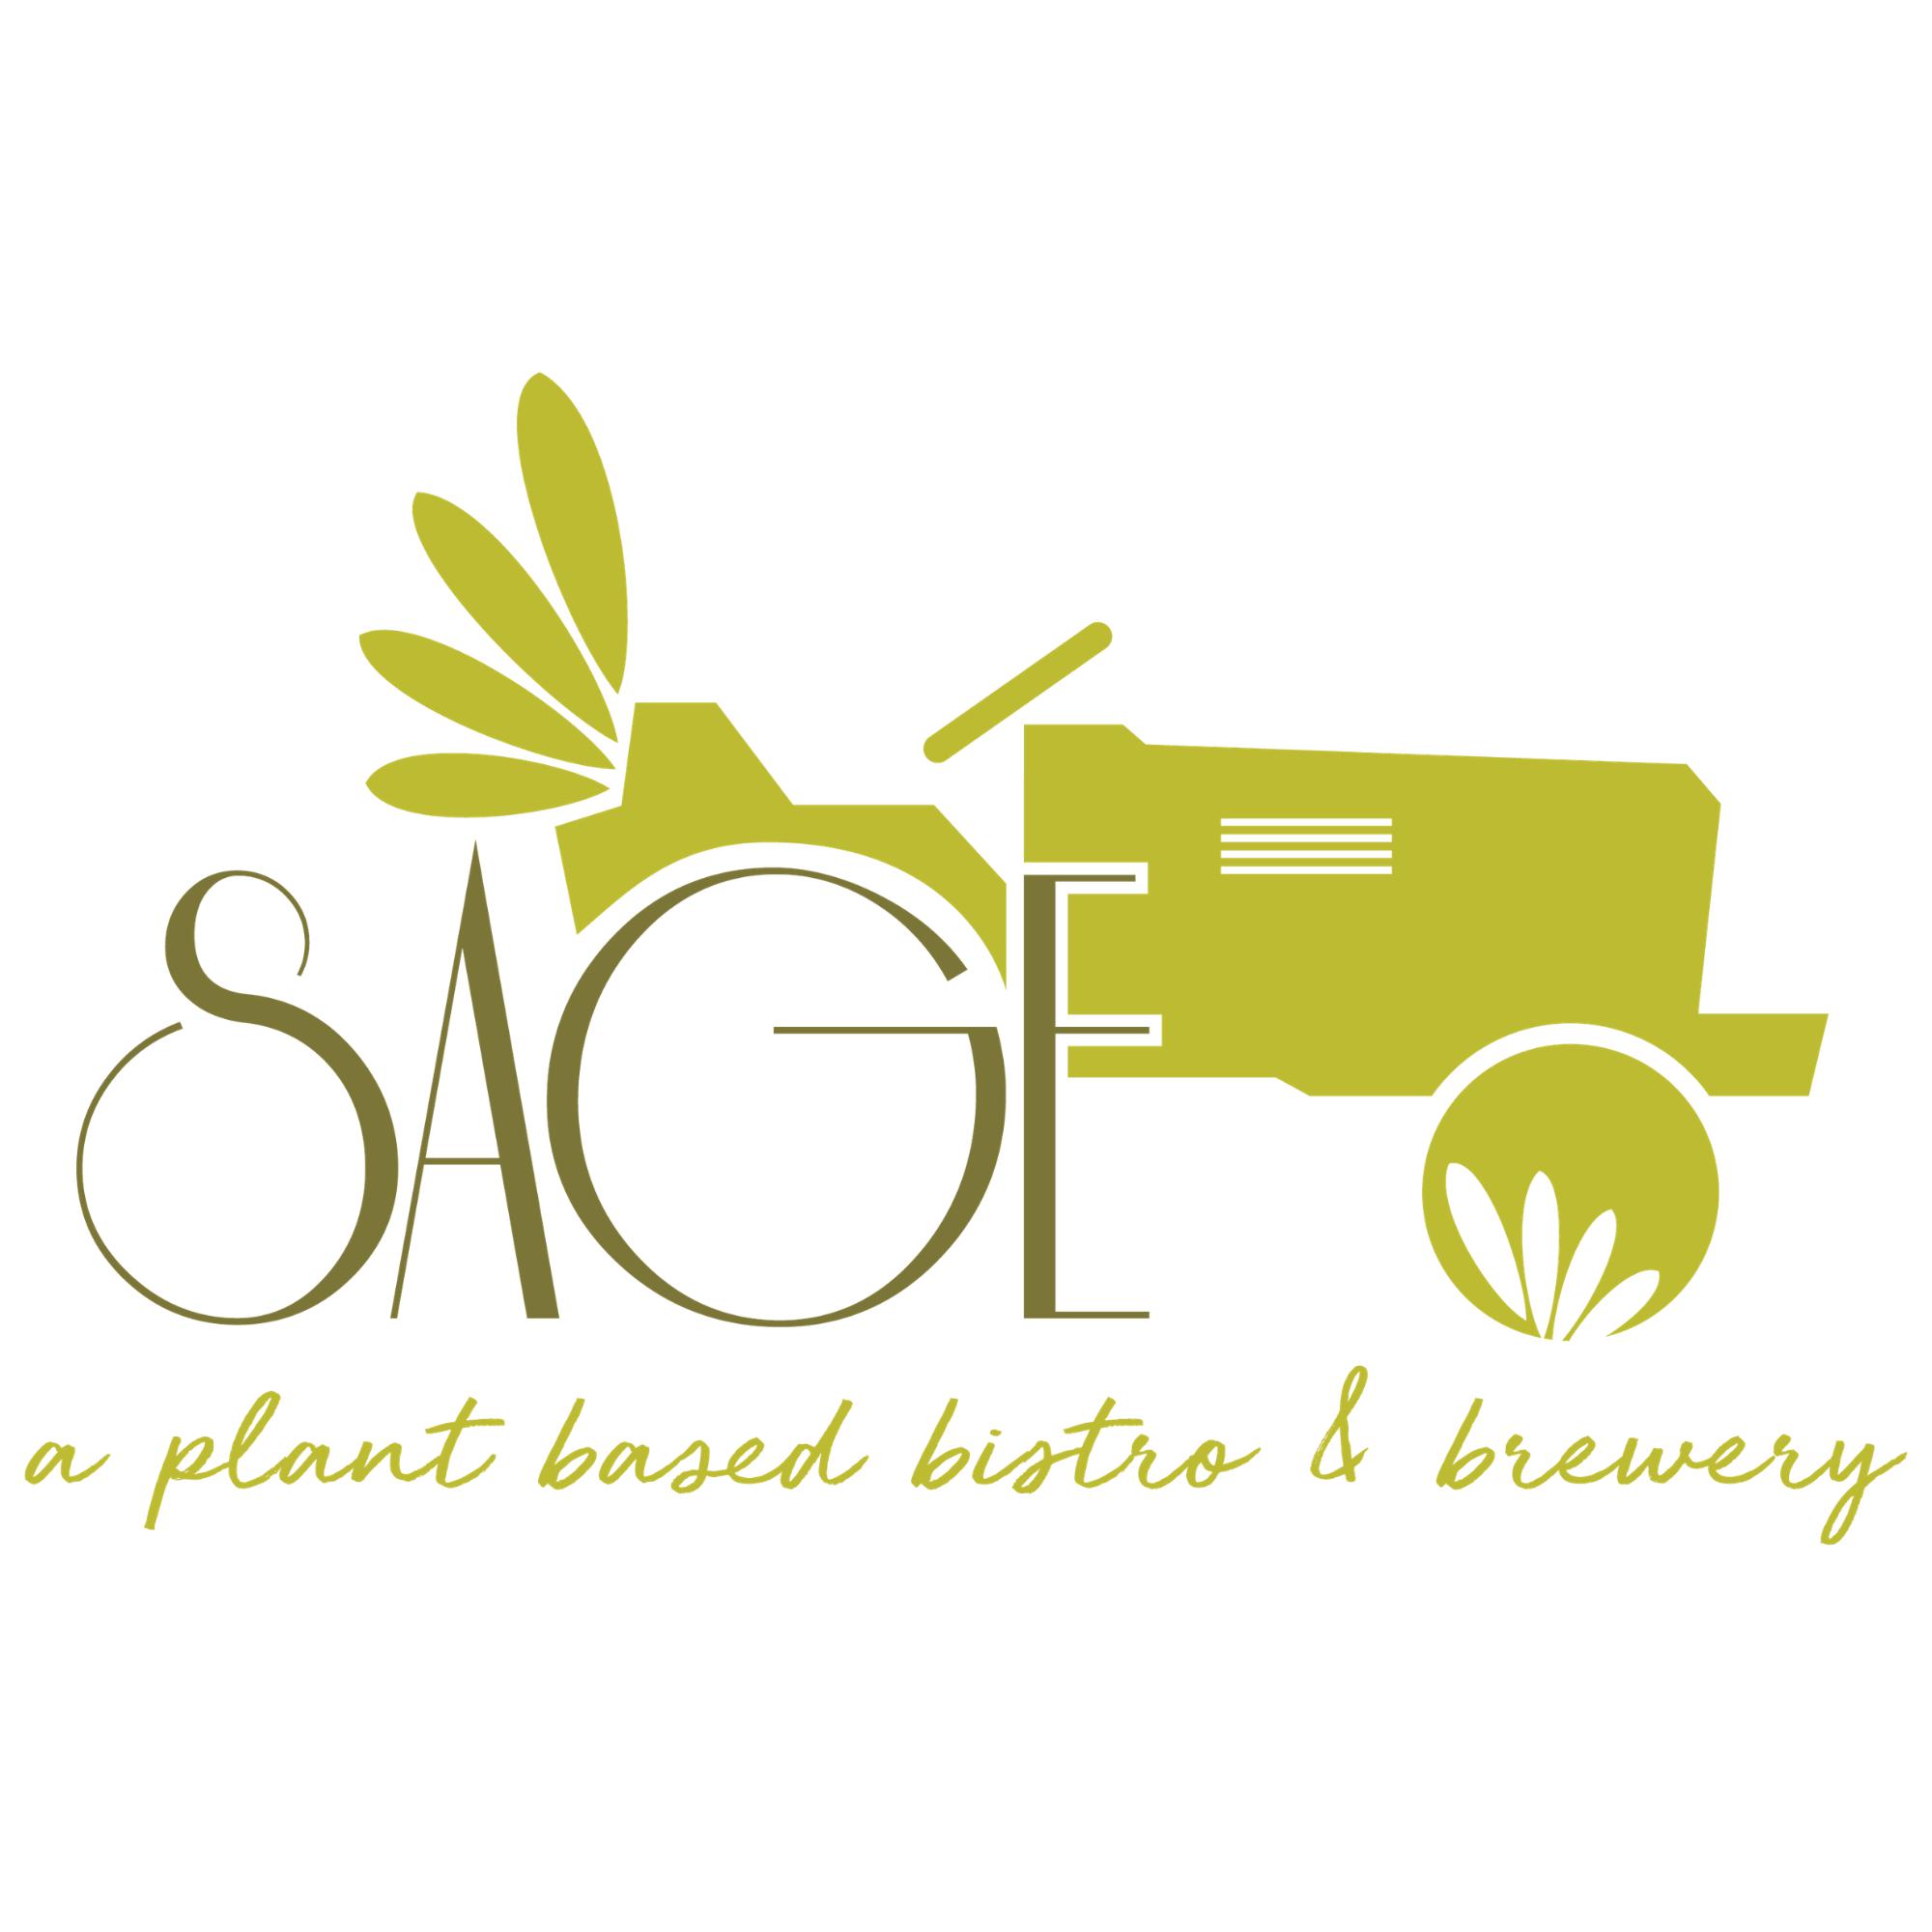 Sage Plant Based Bistro & Brewery Los Angeles